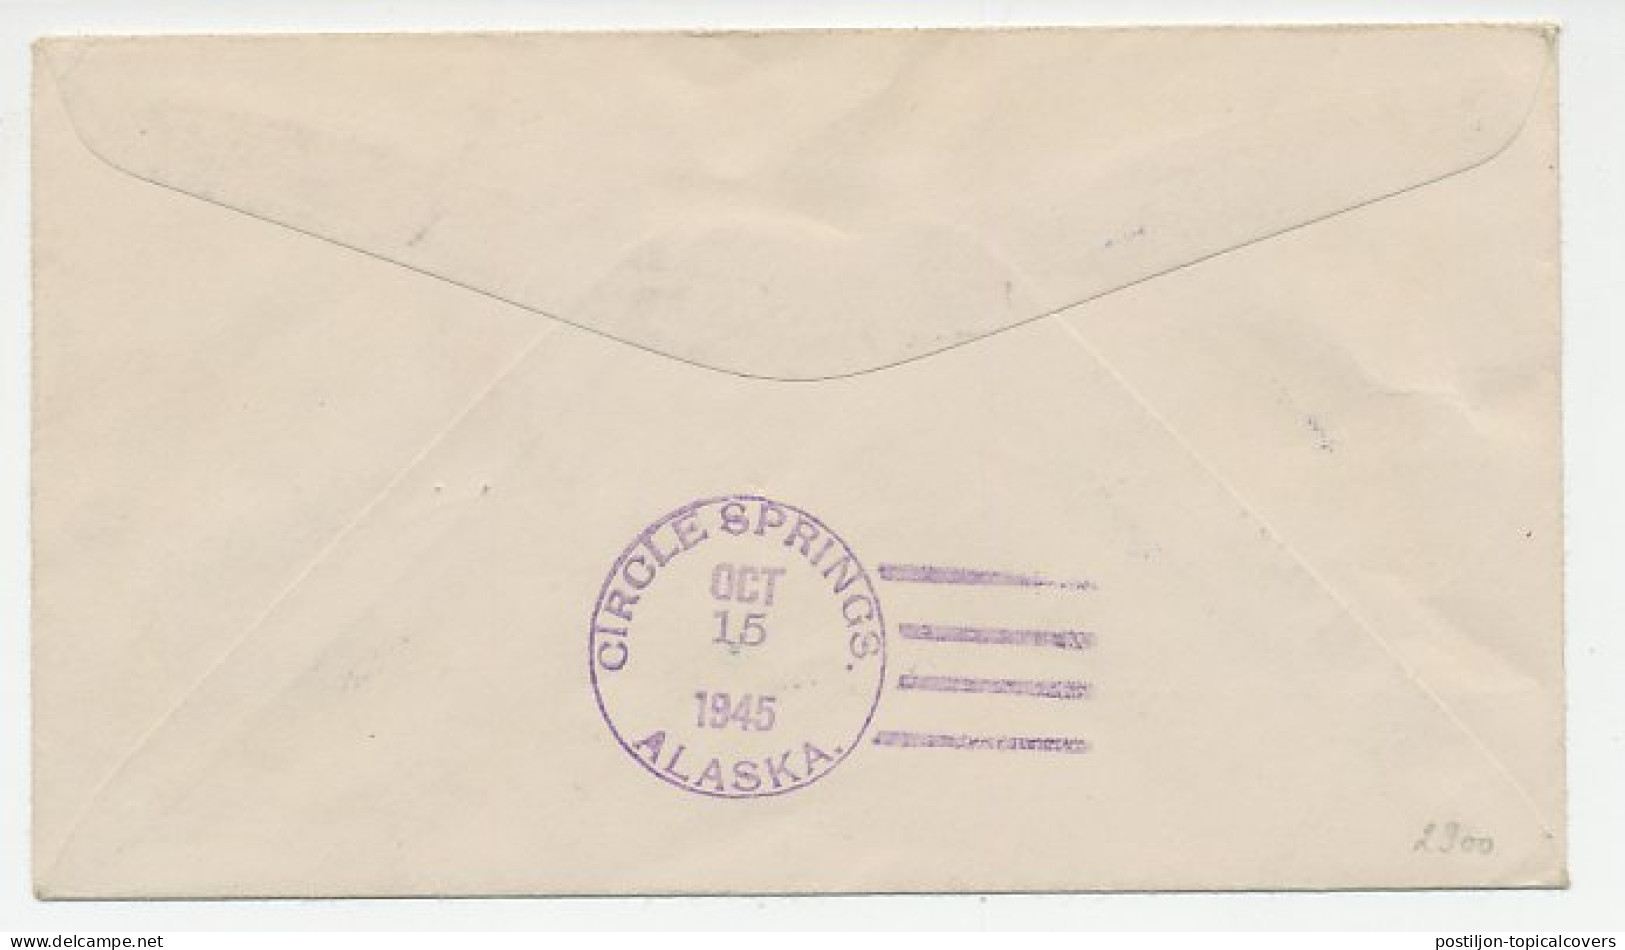 Cover / Postmark USA 1945 Alaska Dog Team Post - Miller House - Arctic Expeditions